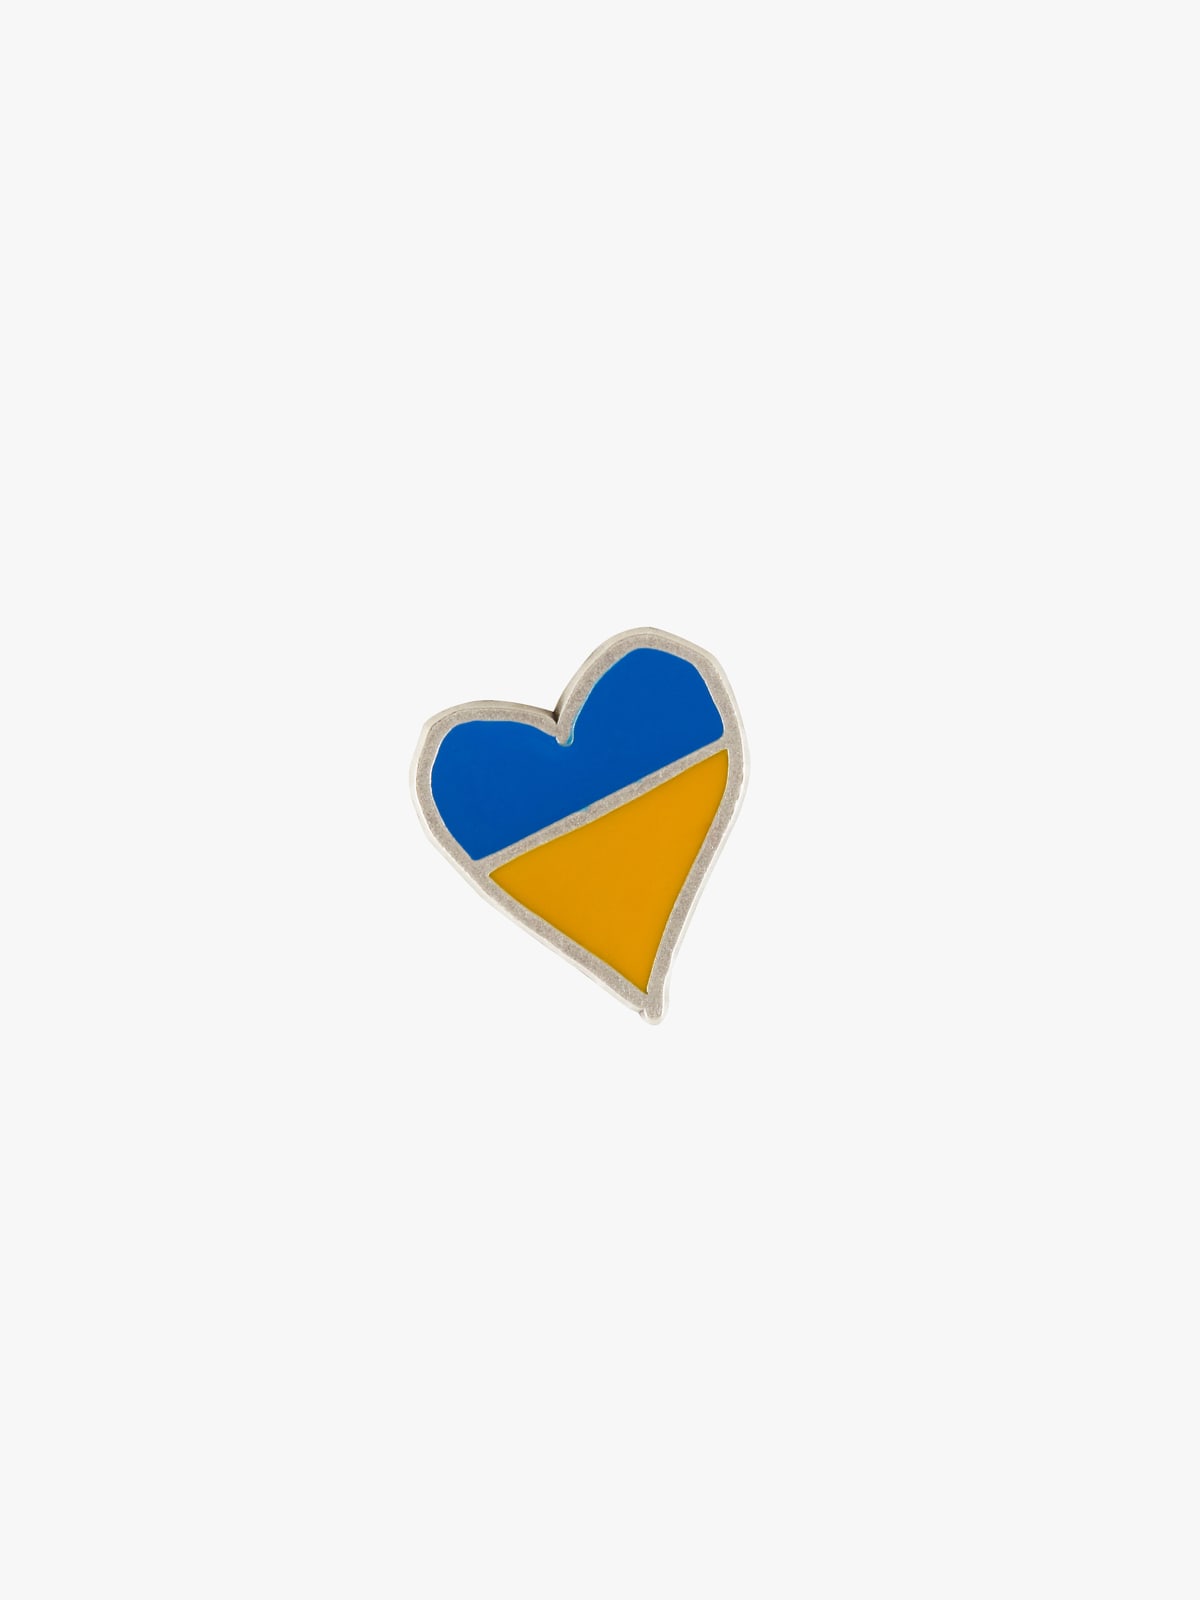 The heart of Ukraine pin